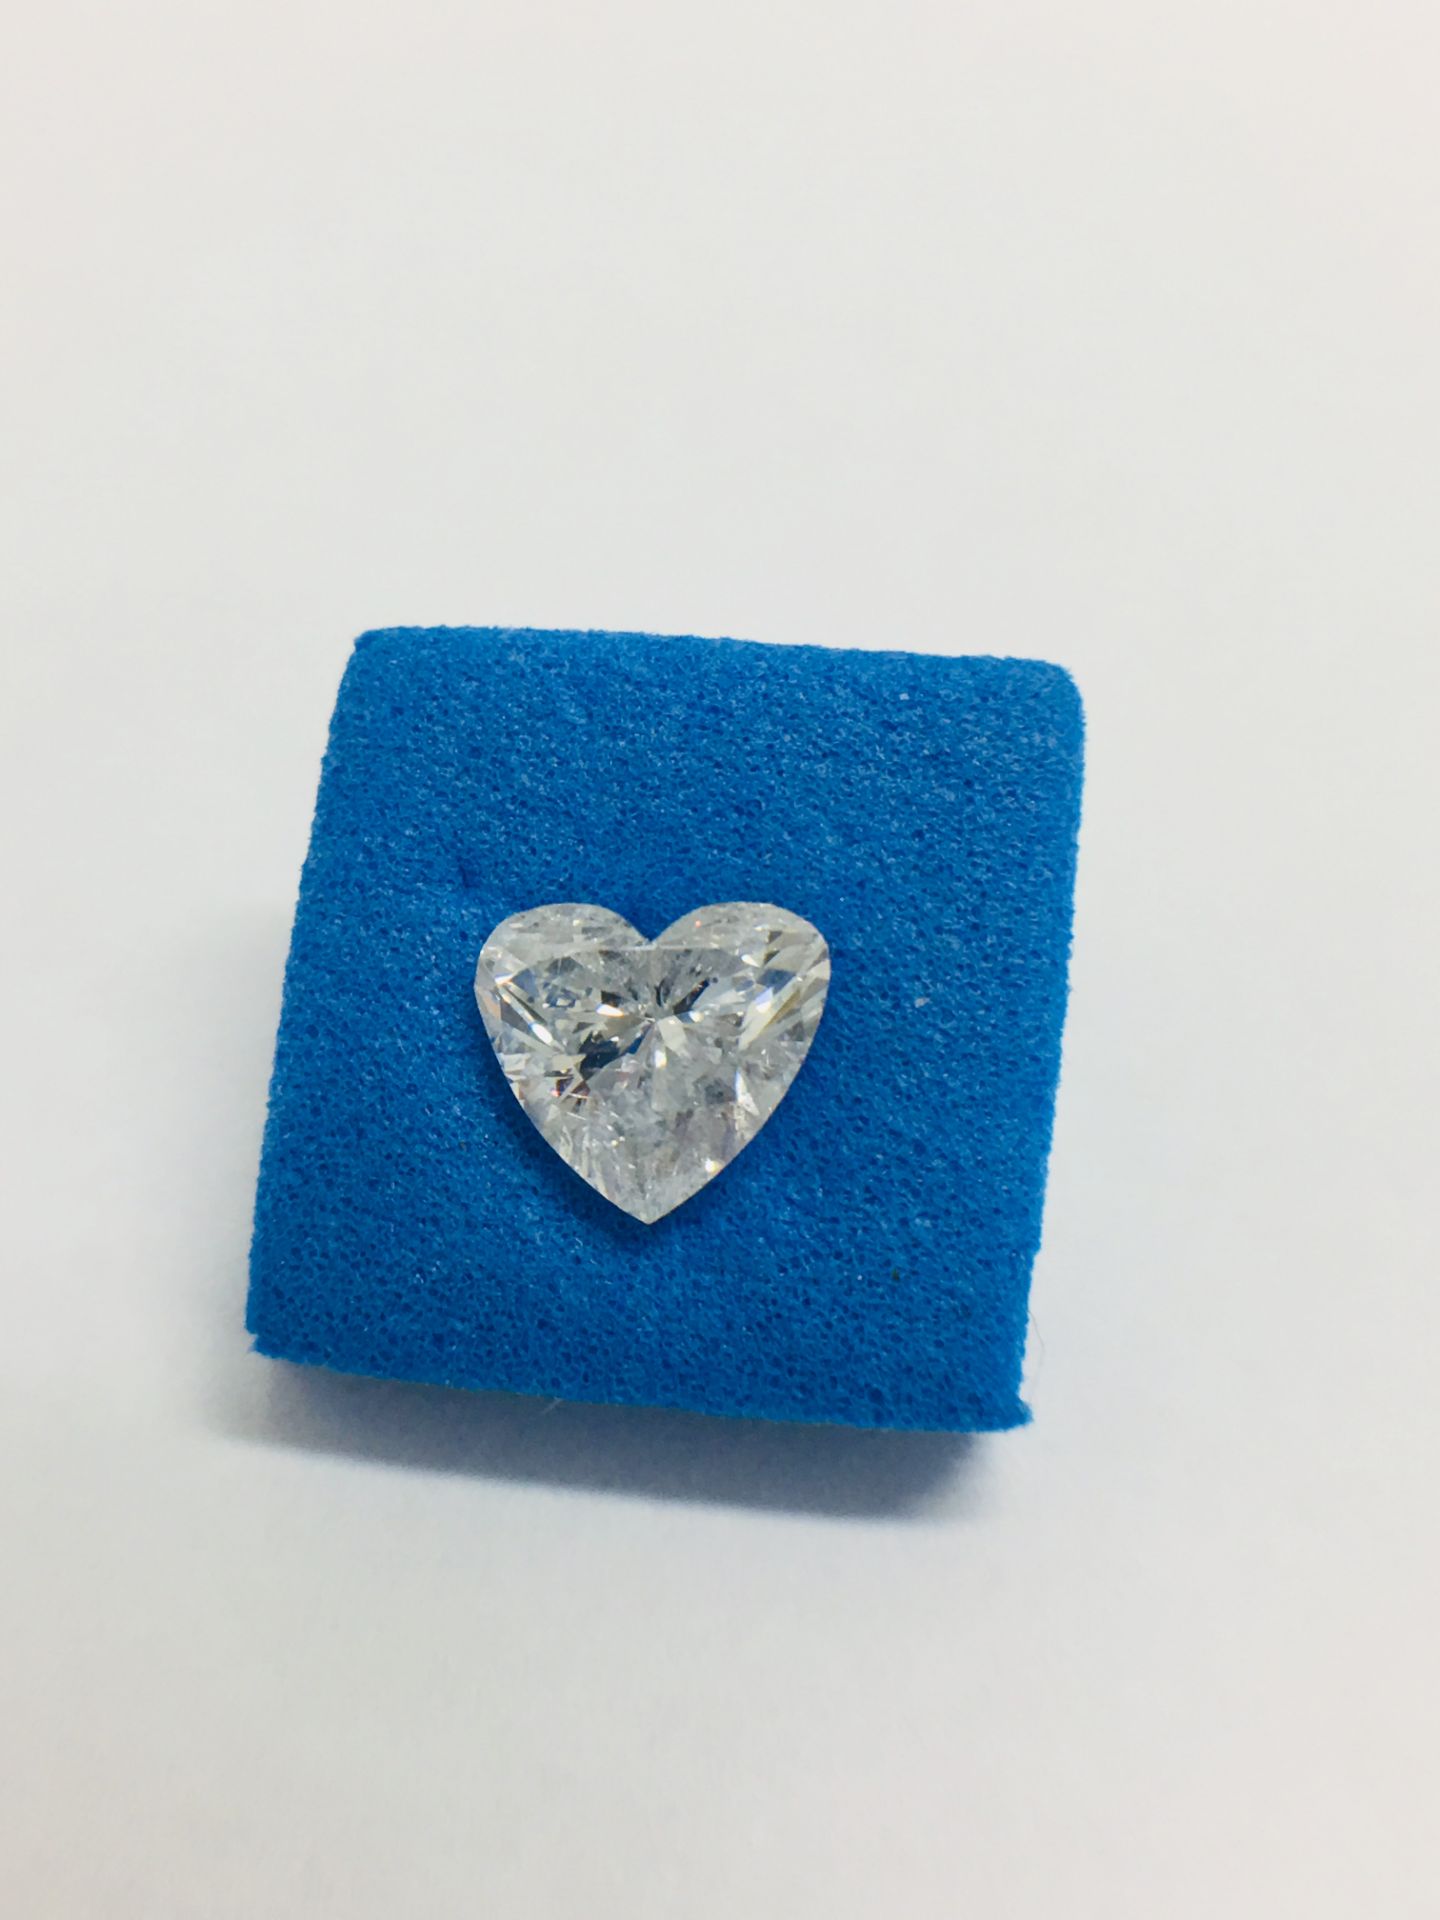 1ct Heart shape Natural Diamond